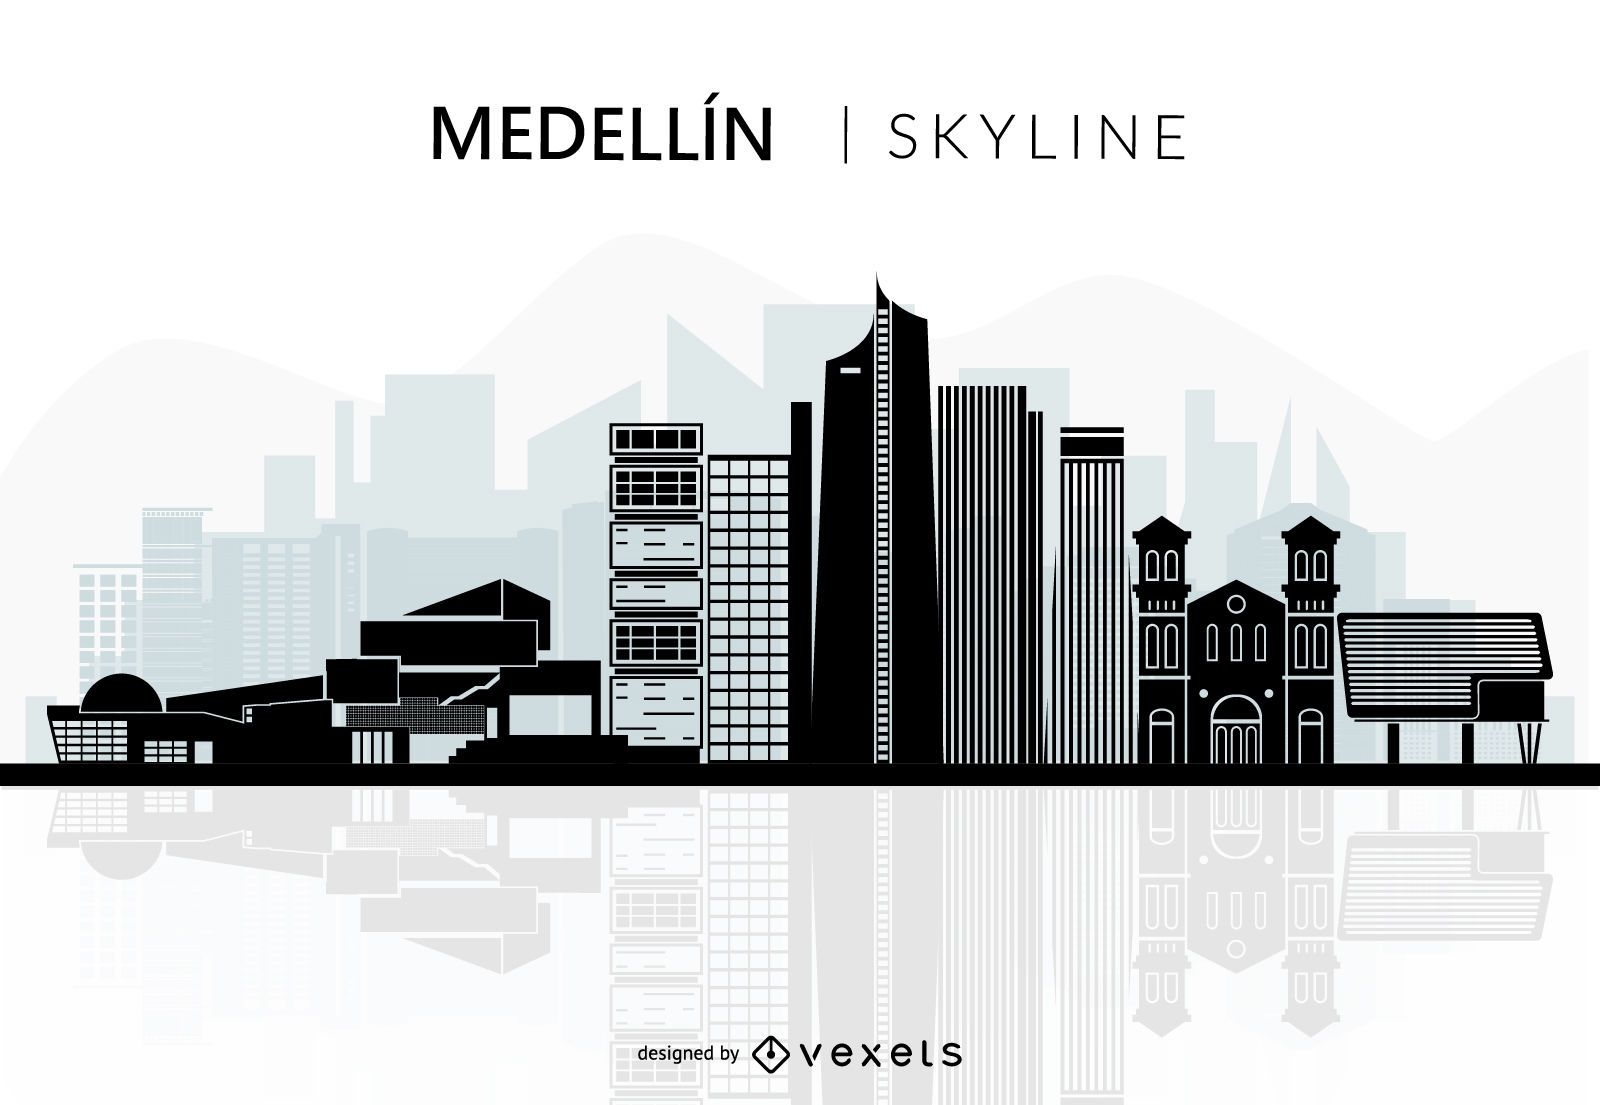 Medellin skyline silhouette